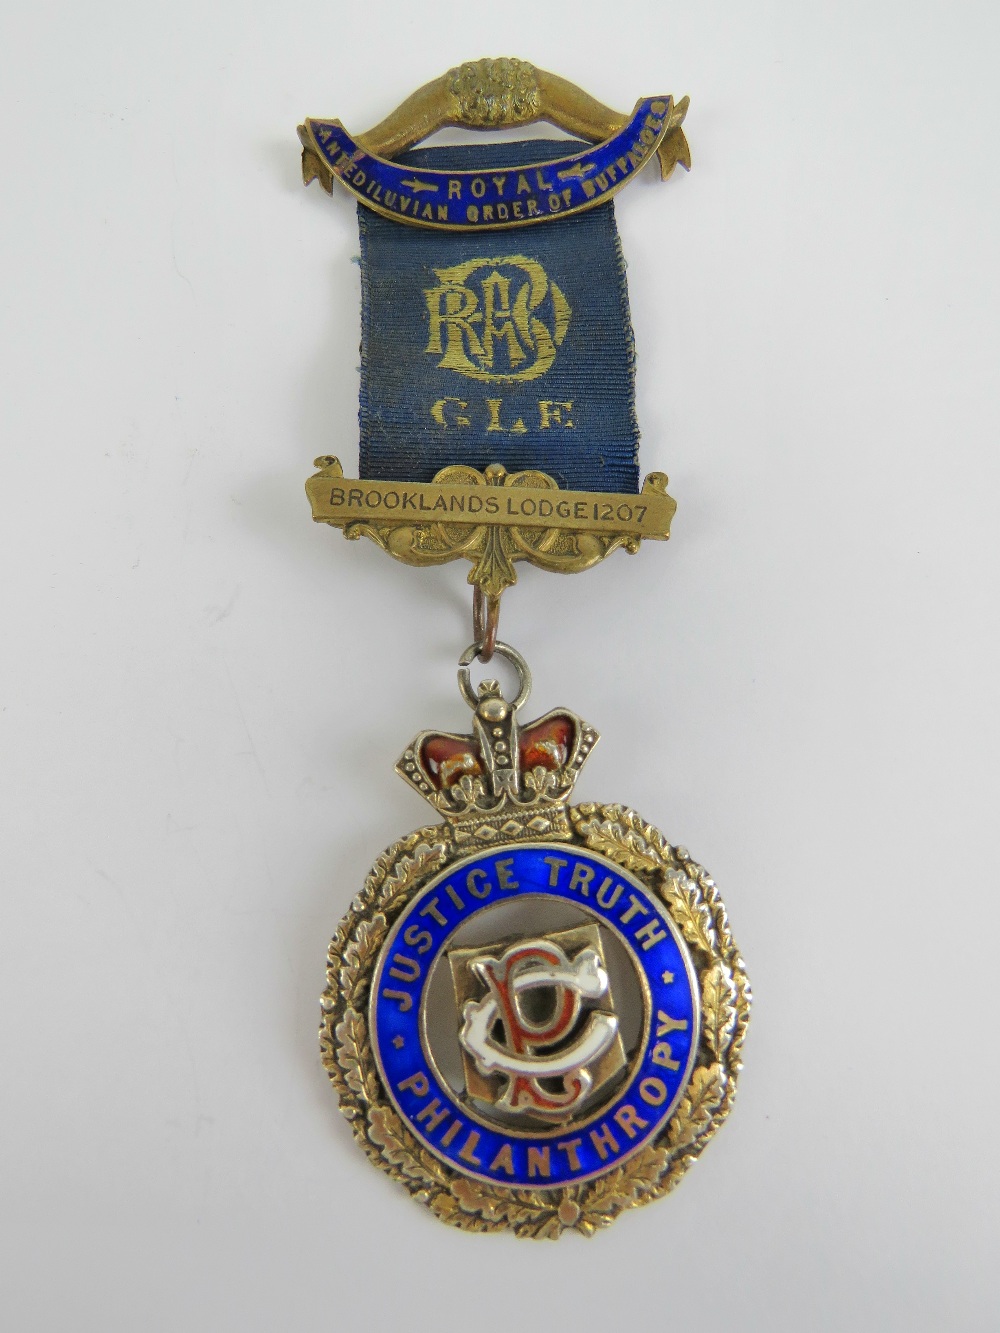 Royal Antediluvian Order of Buffaloes; Brooklands Lodge No 1207 medal having HM silver jewel below,